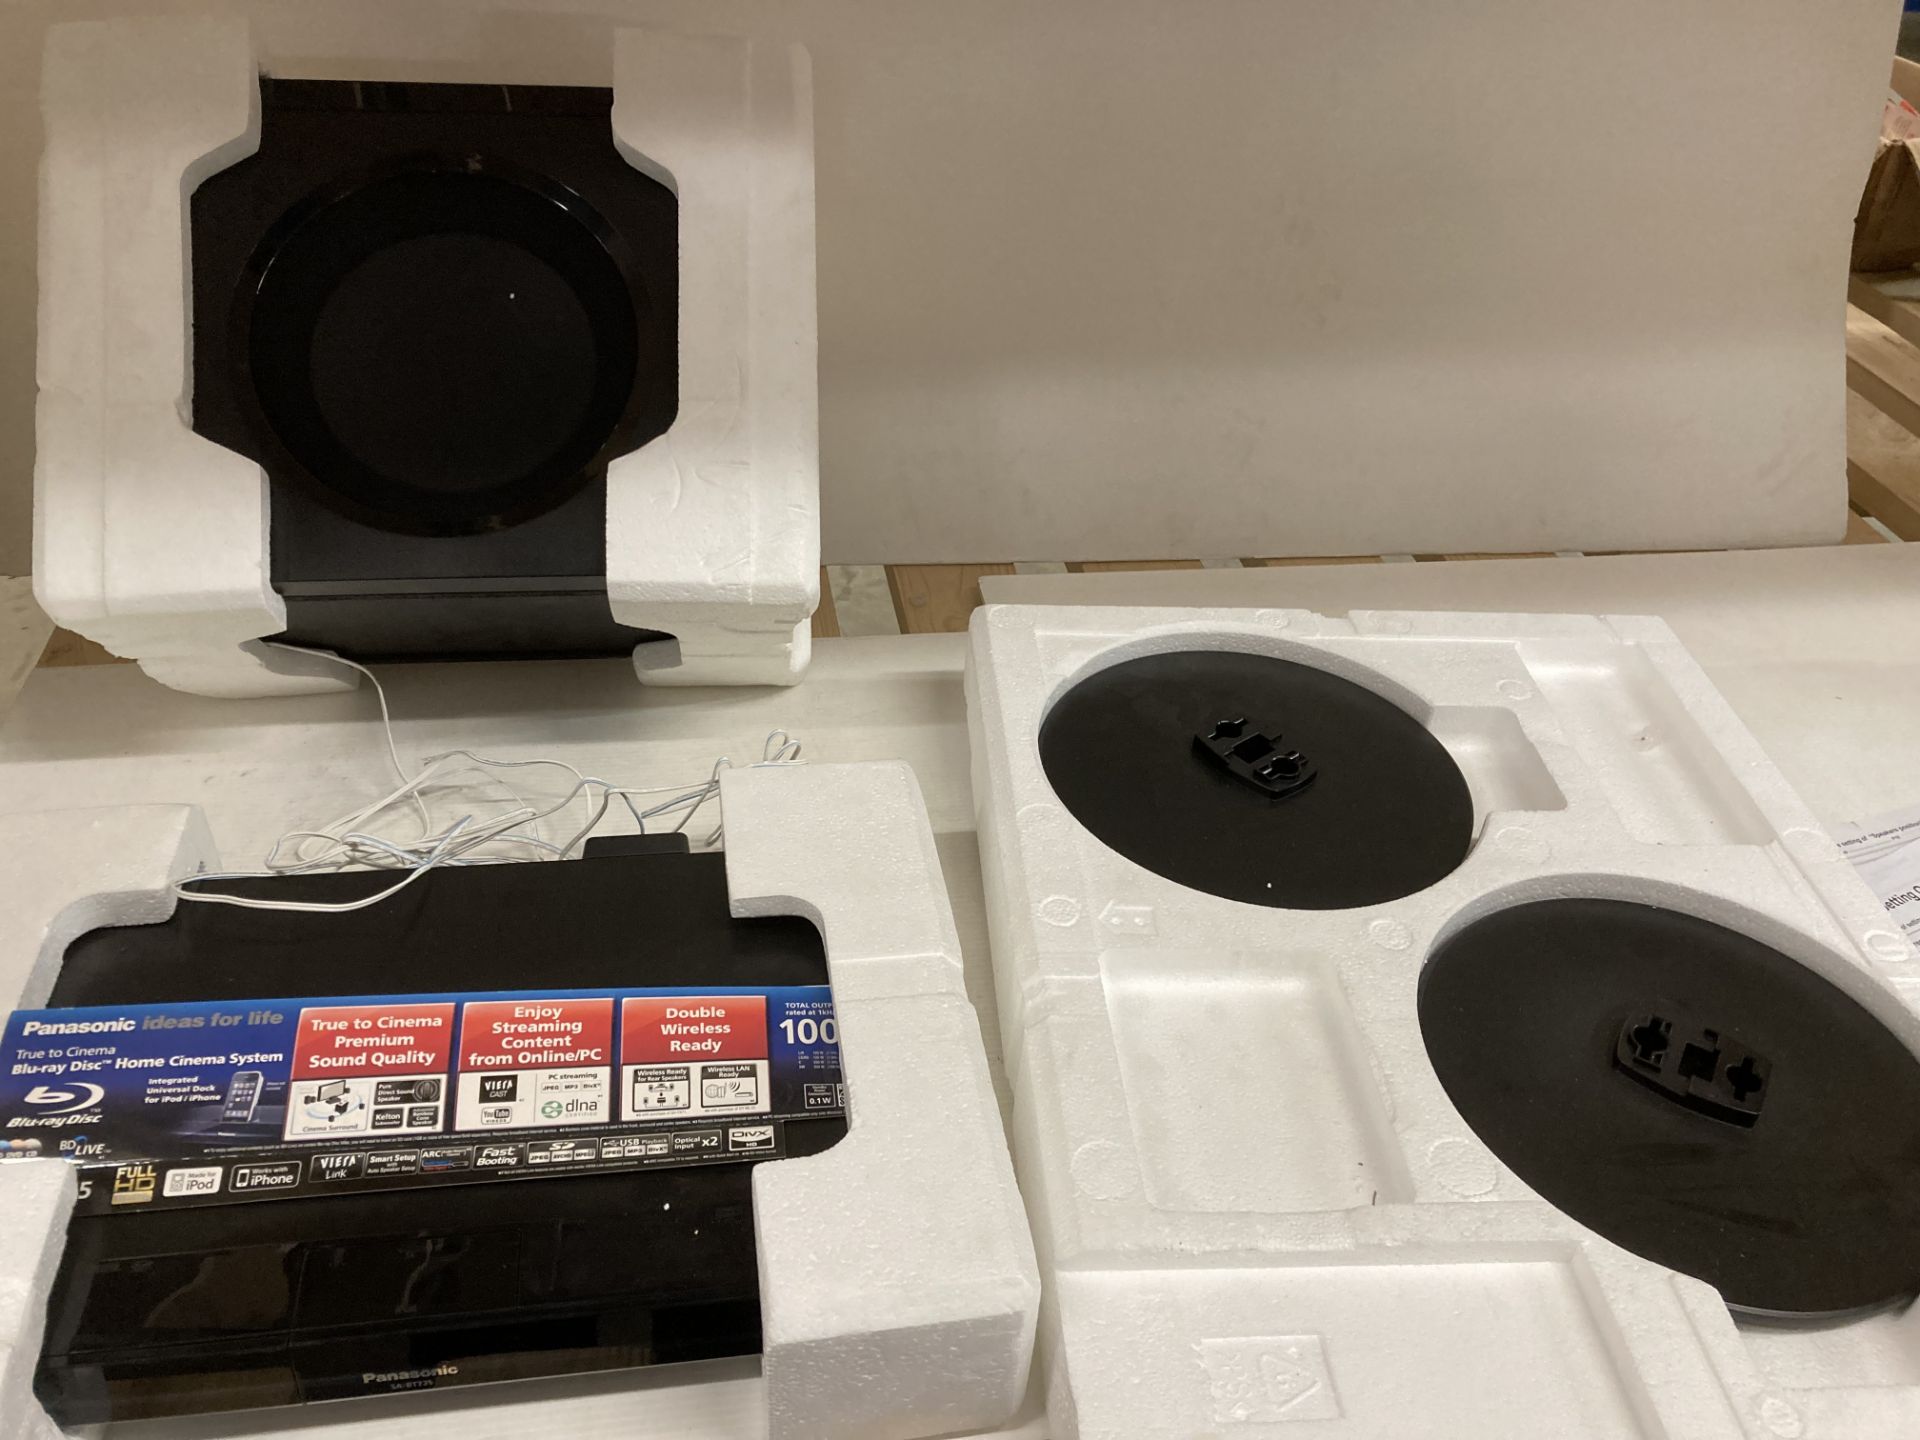 Panasonic Blu-ray disc home theatre sound system model SC-BT735 (boxed) (saleroom location: L11 - Image 4 of 4